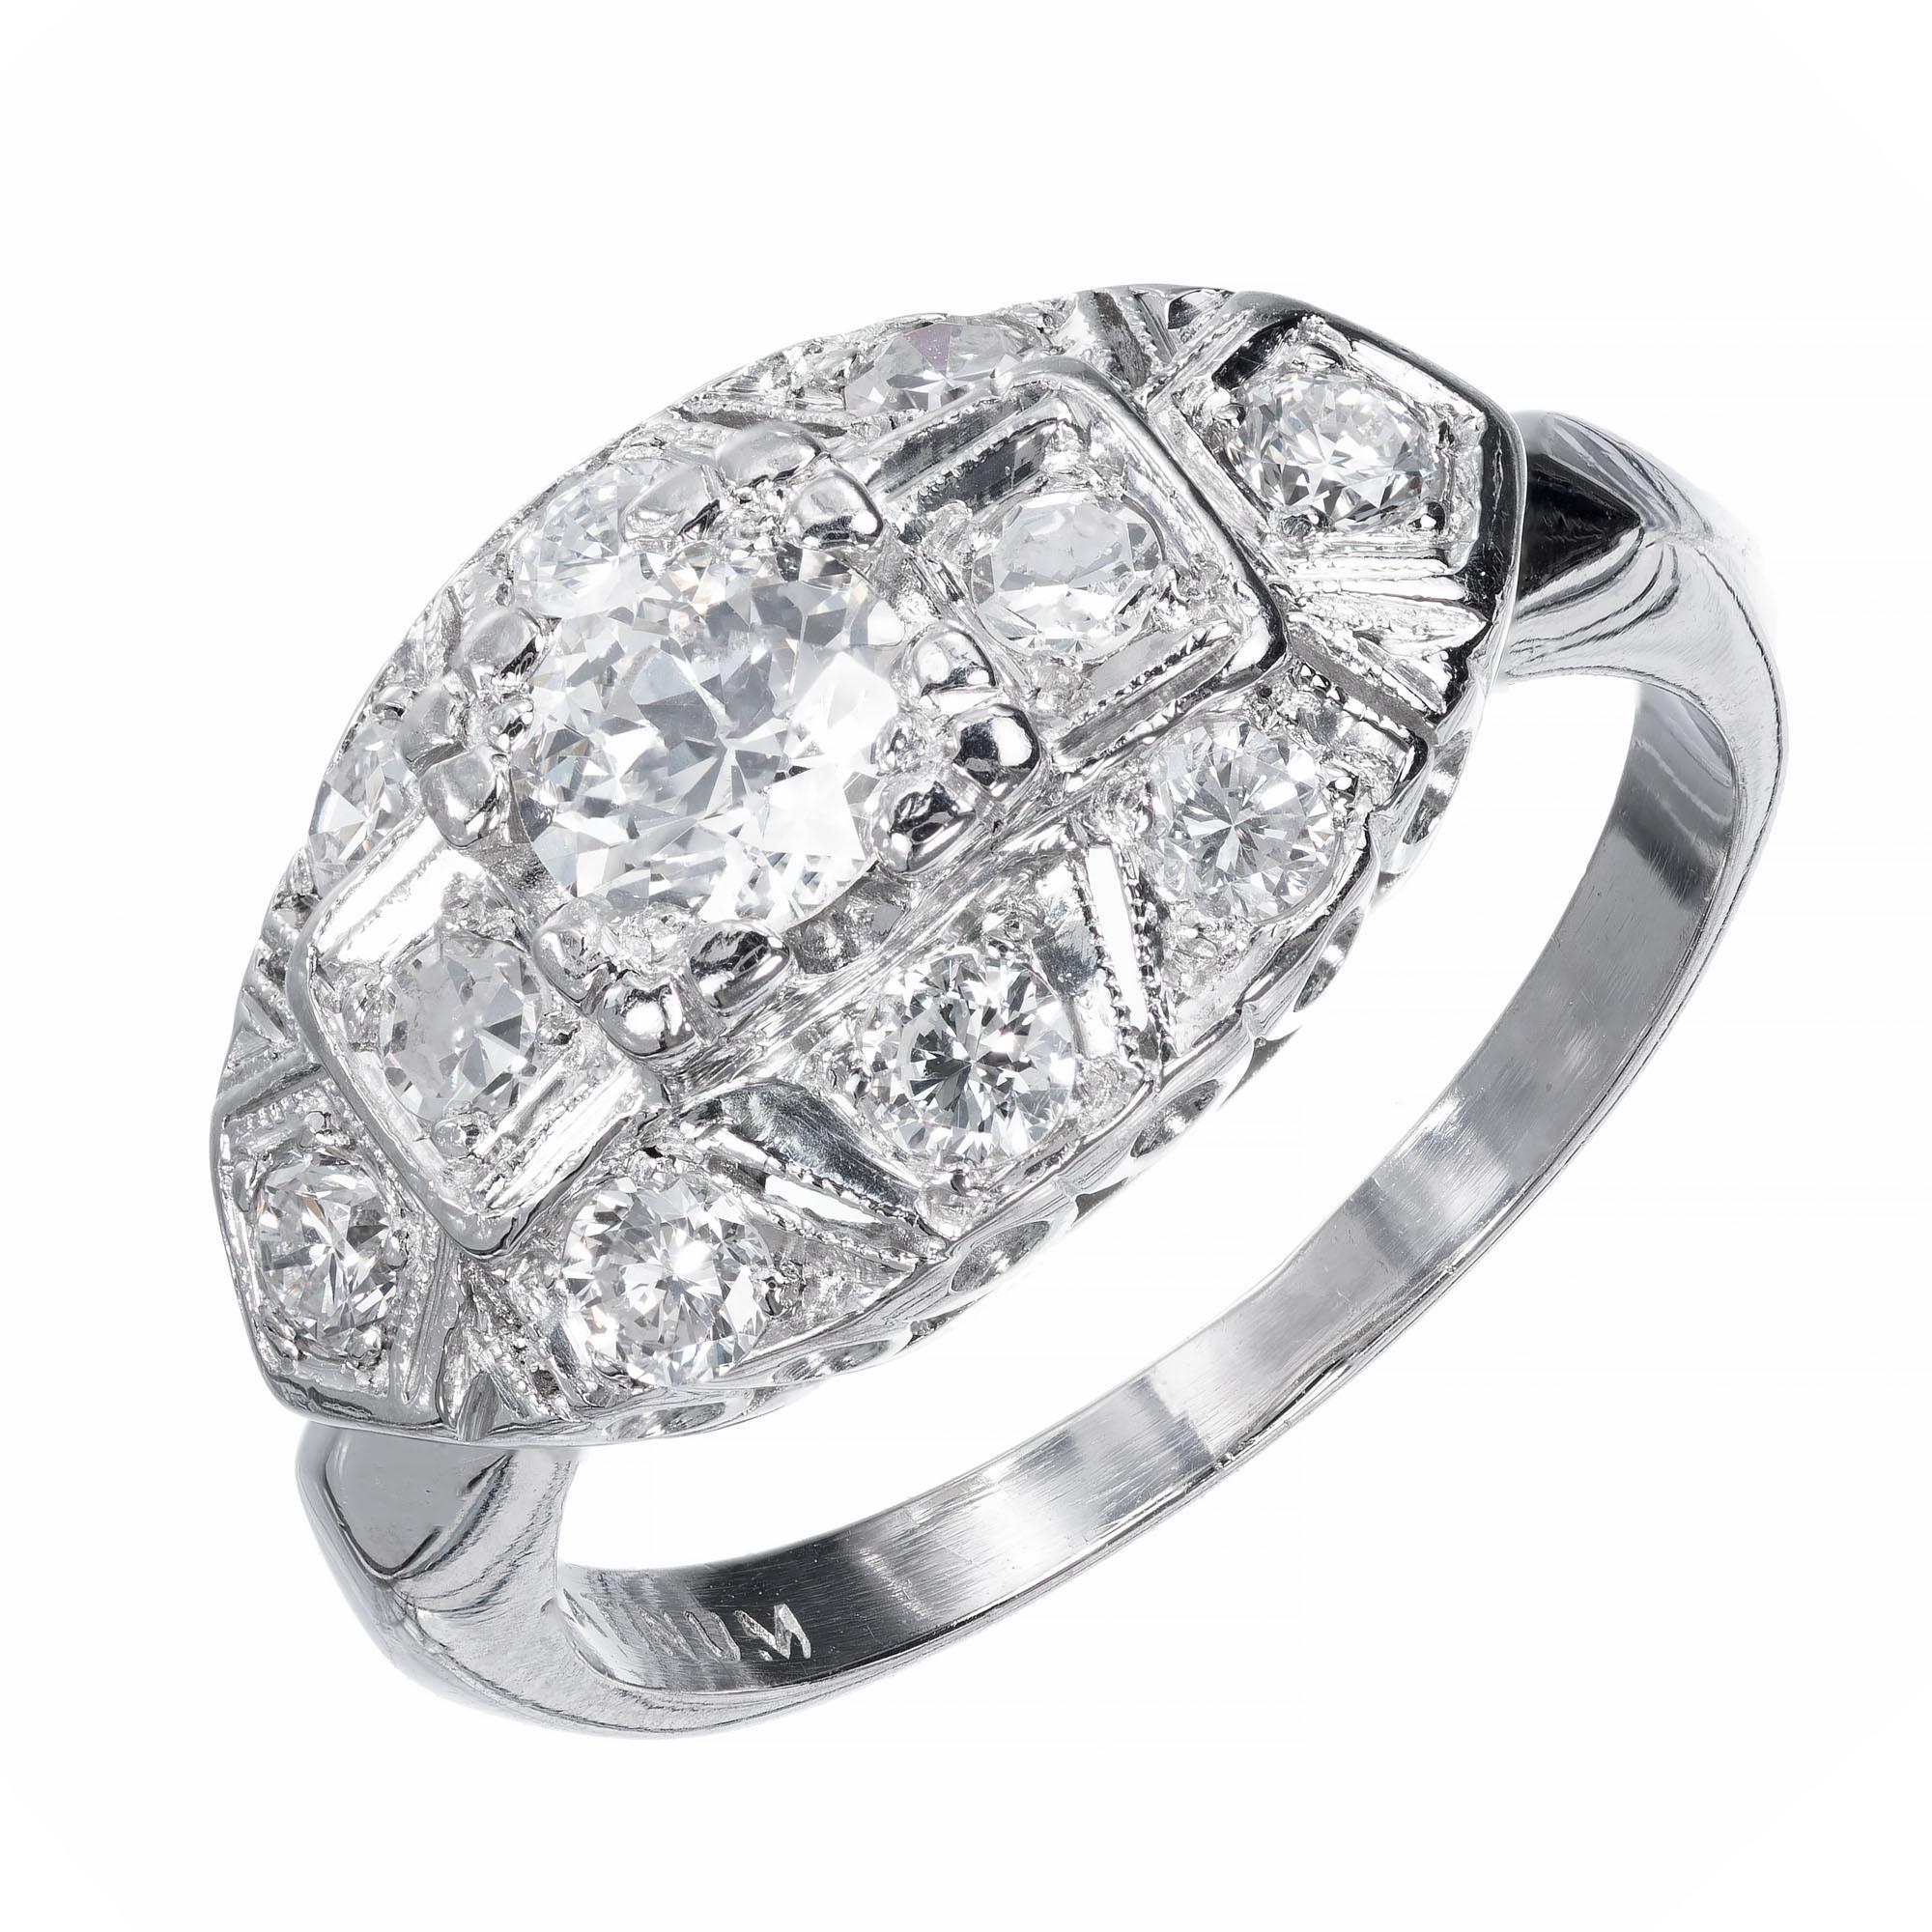 1920's Art Deco Diamond Old European Mixed Cut Platinum Engagement Ring set in platinum. EGL certified. 

1 old European cut diamond, approx. total weight .40cts, H, VS2, Depth: 61/3%, Table: 47%.  EGL cert# US 64065702D
10 mixed cut round diamonds,